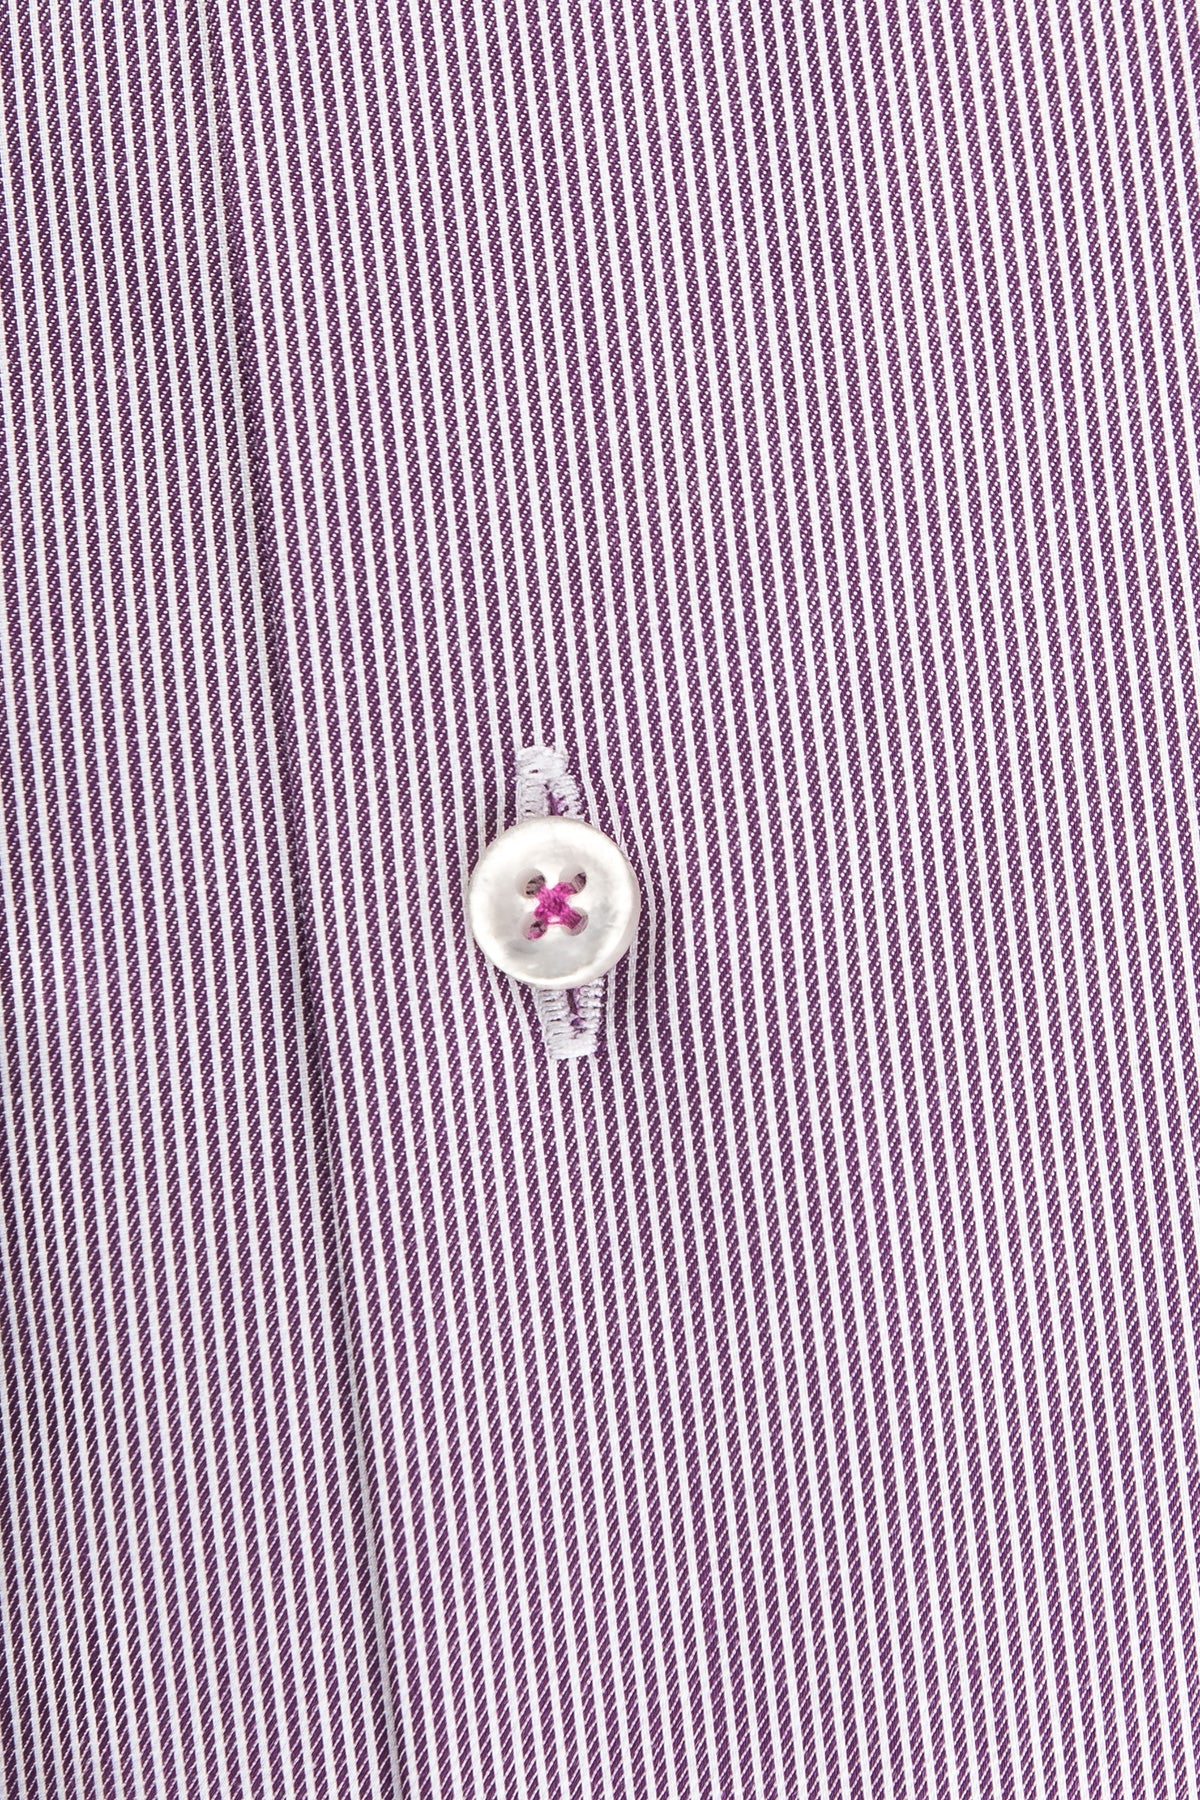 Purple regular fit shirt with contrast details